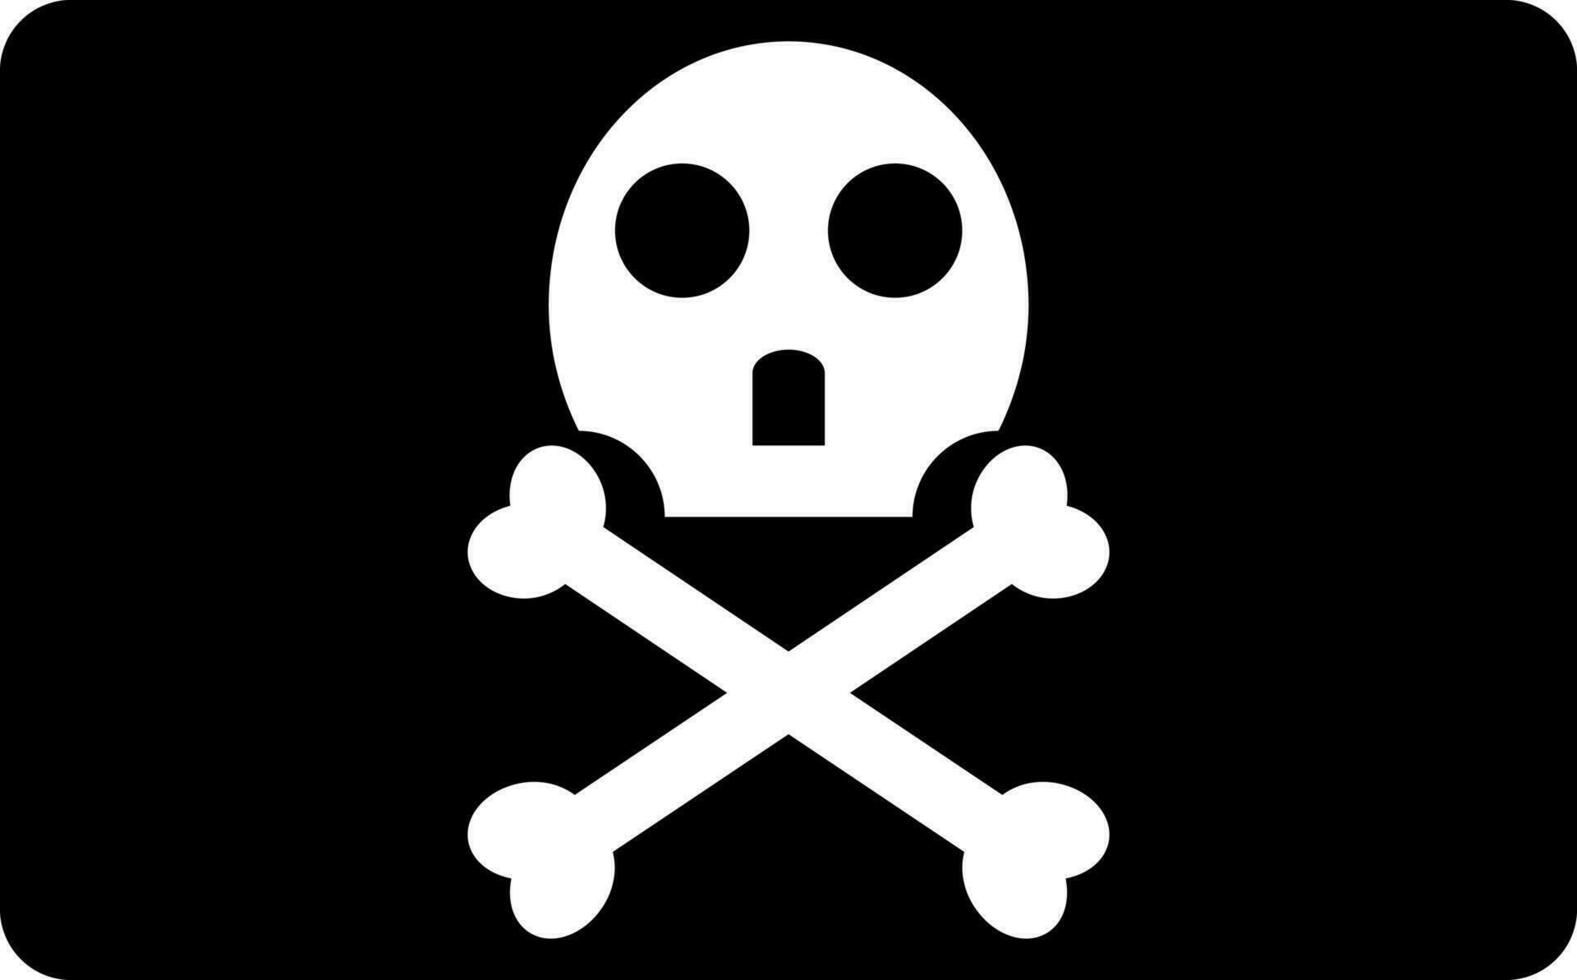 Danger sign or symbol in Black and White color. vector